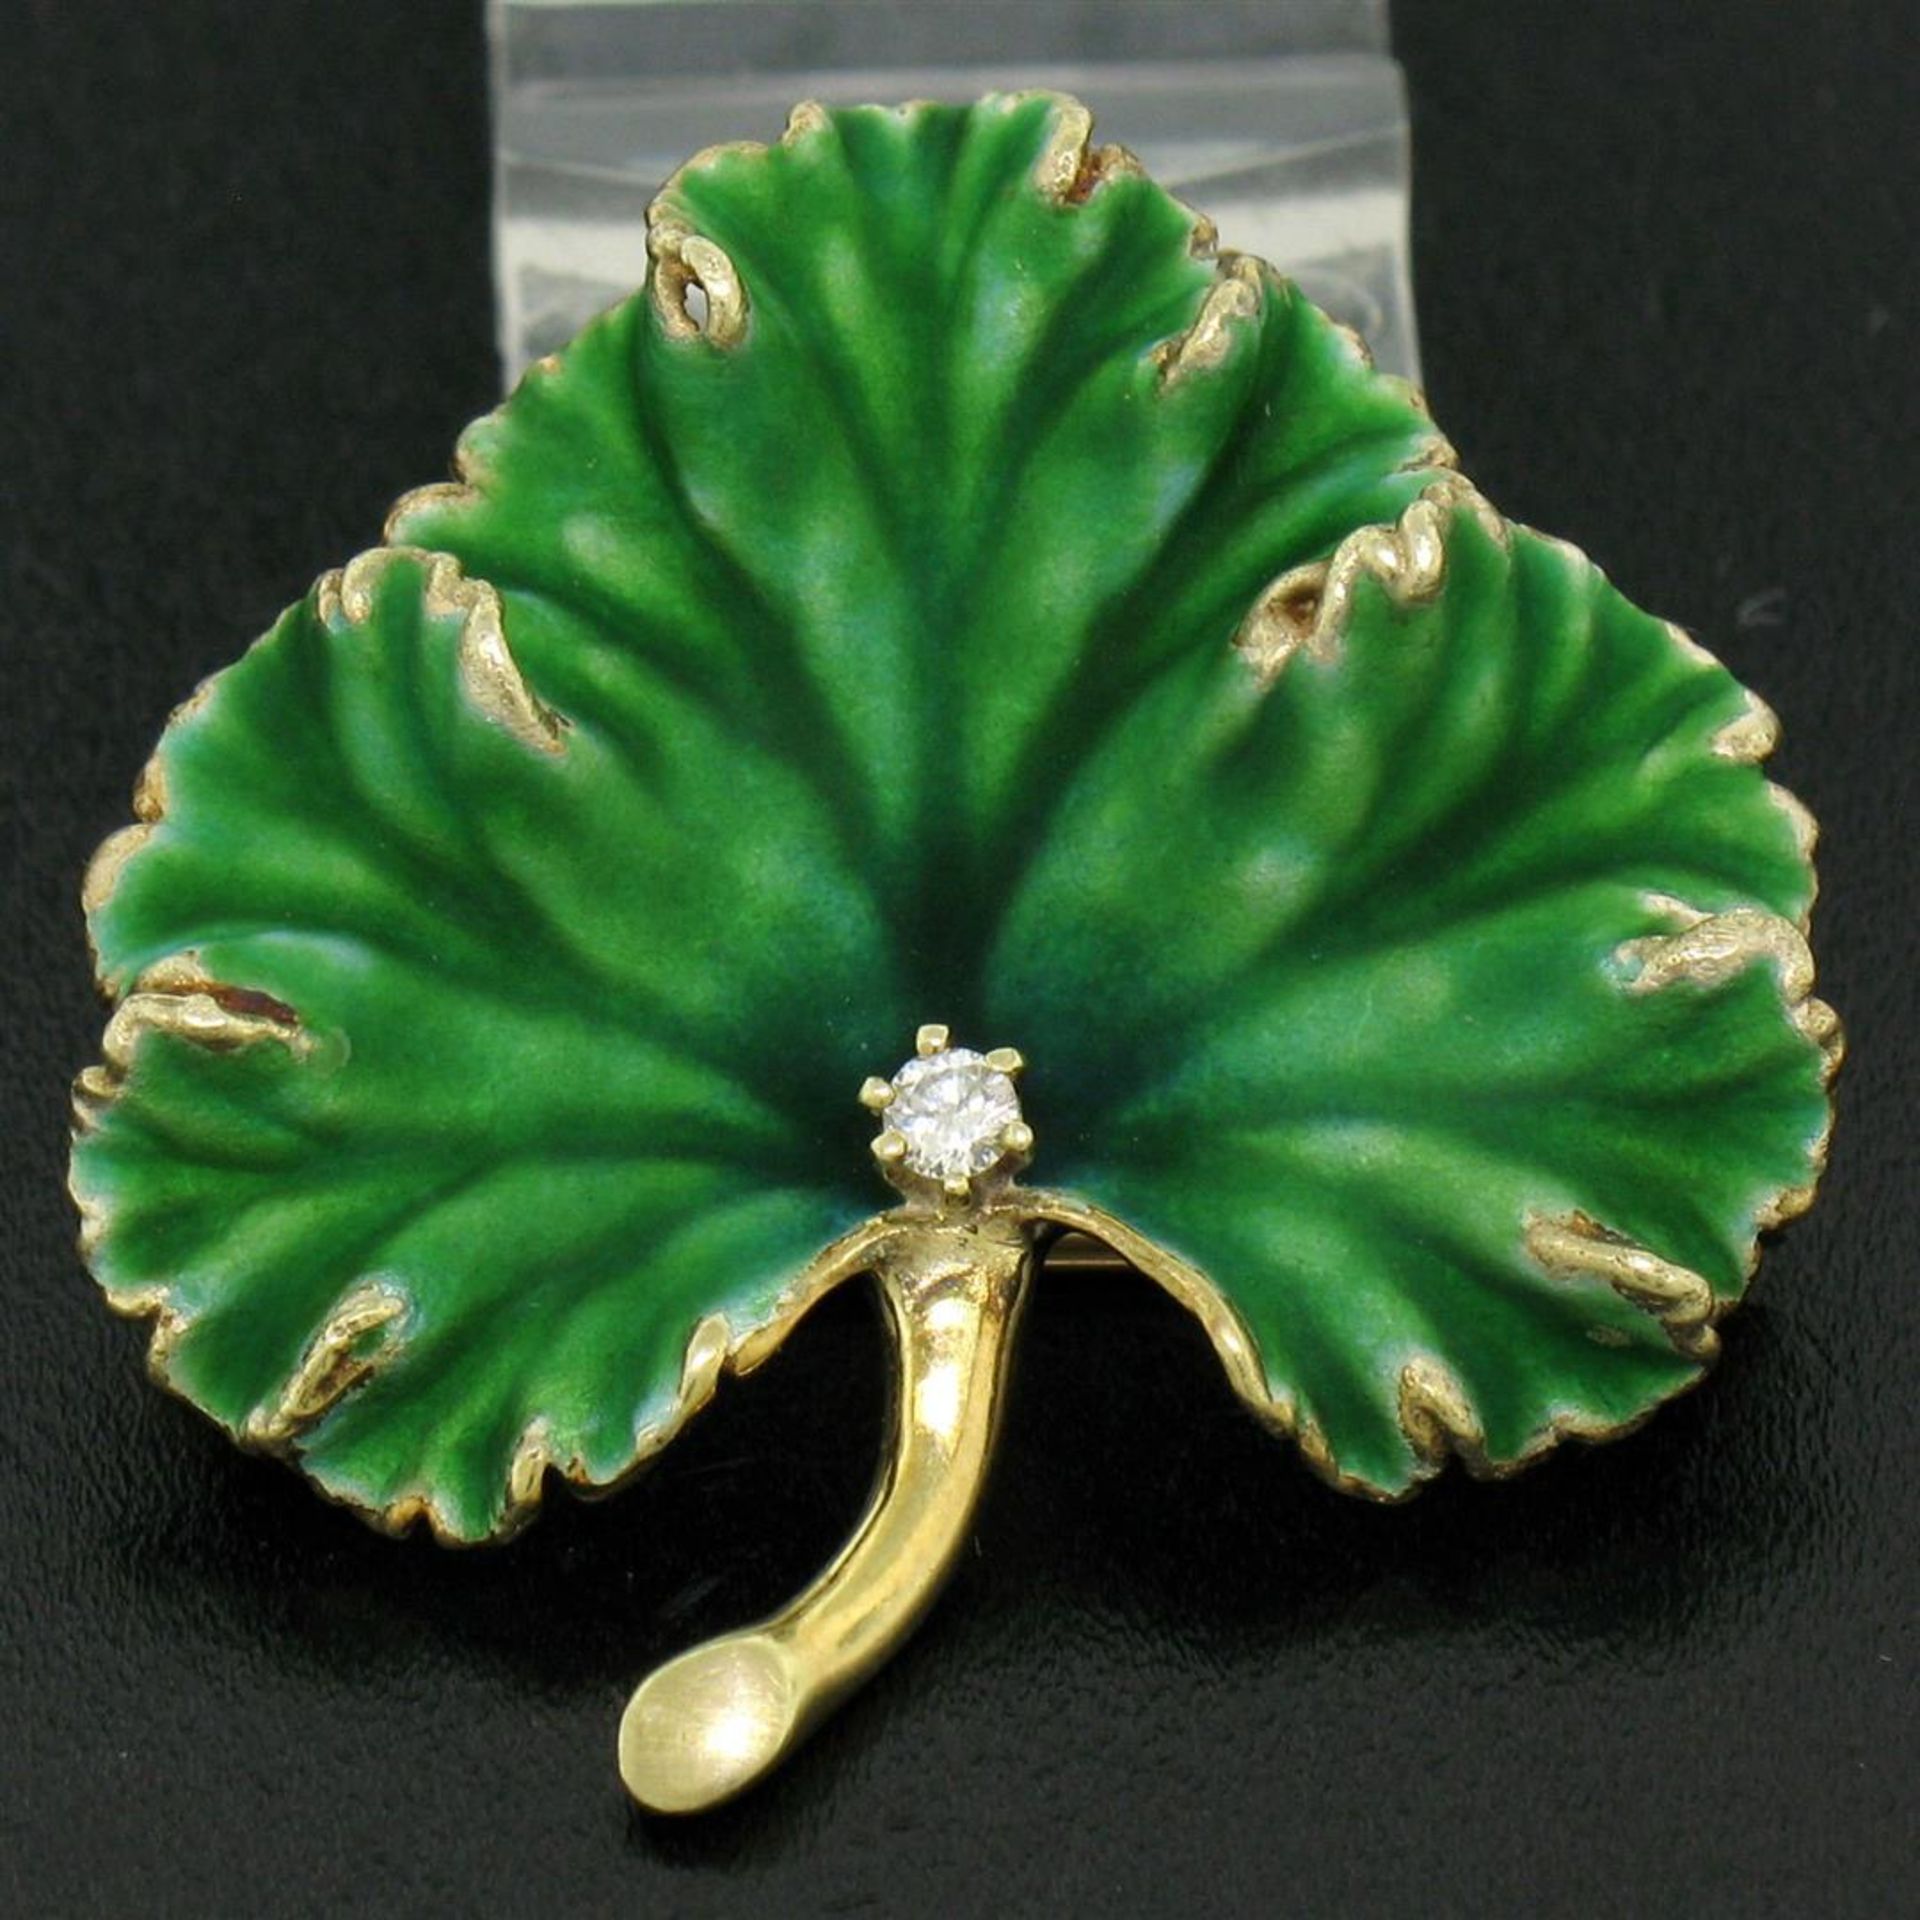 Unique Omega Vintage 14K Yellow Gold Green Enamel & Diamond Detailed Leaf Brooch - Image 2 of 8